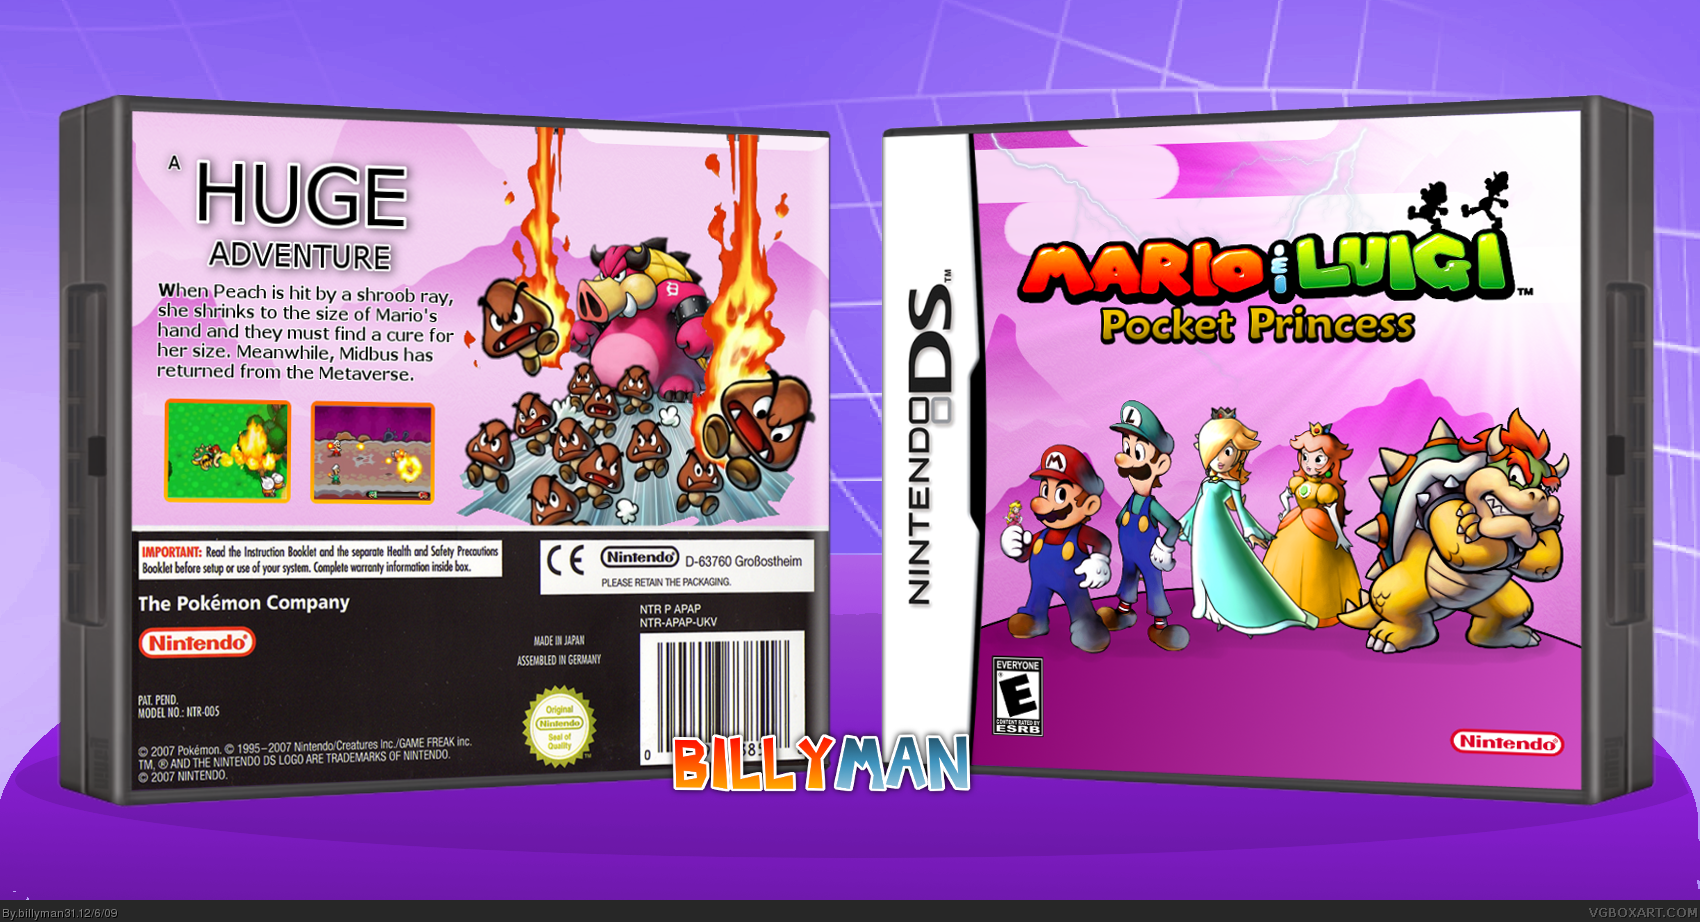 Mario & Luigi: Pocket Princess. box cover